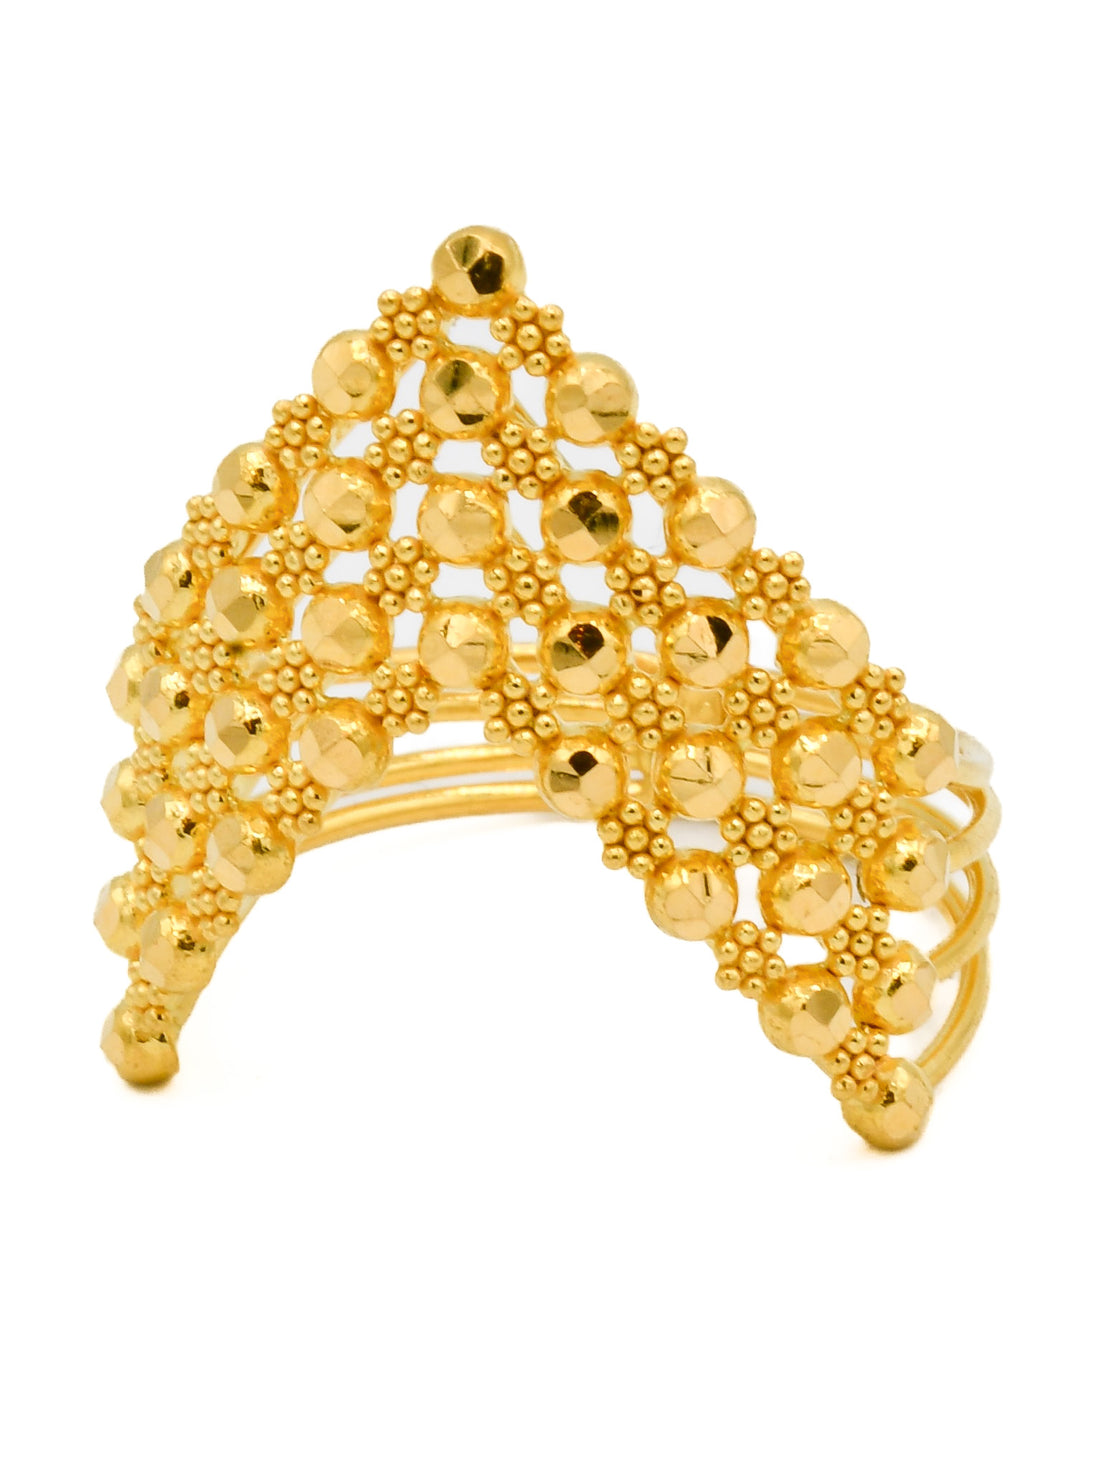 22ct Gold Ladies Filigree Ring - Roop Darshan